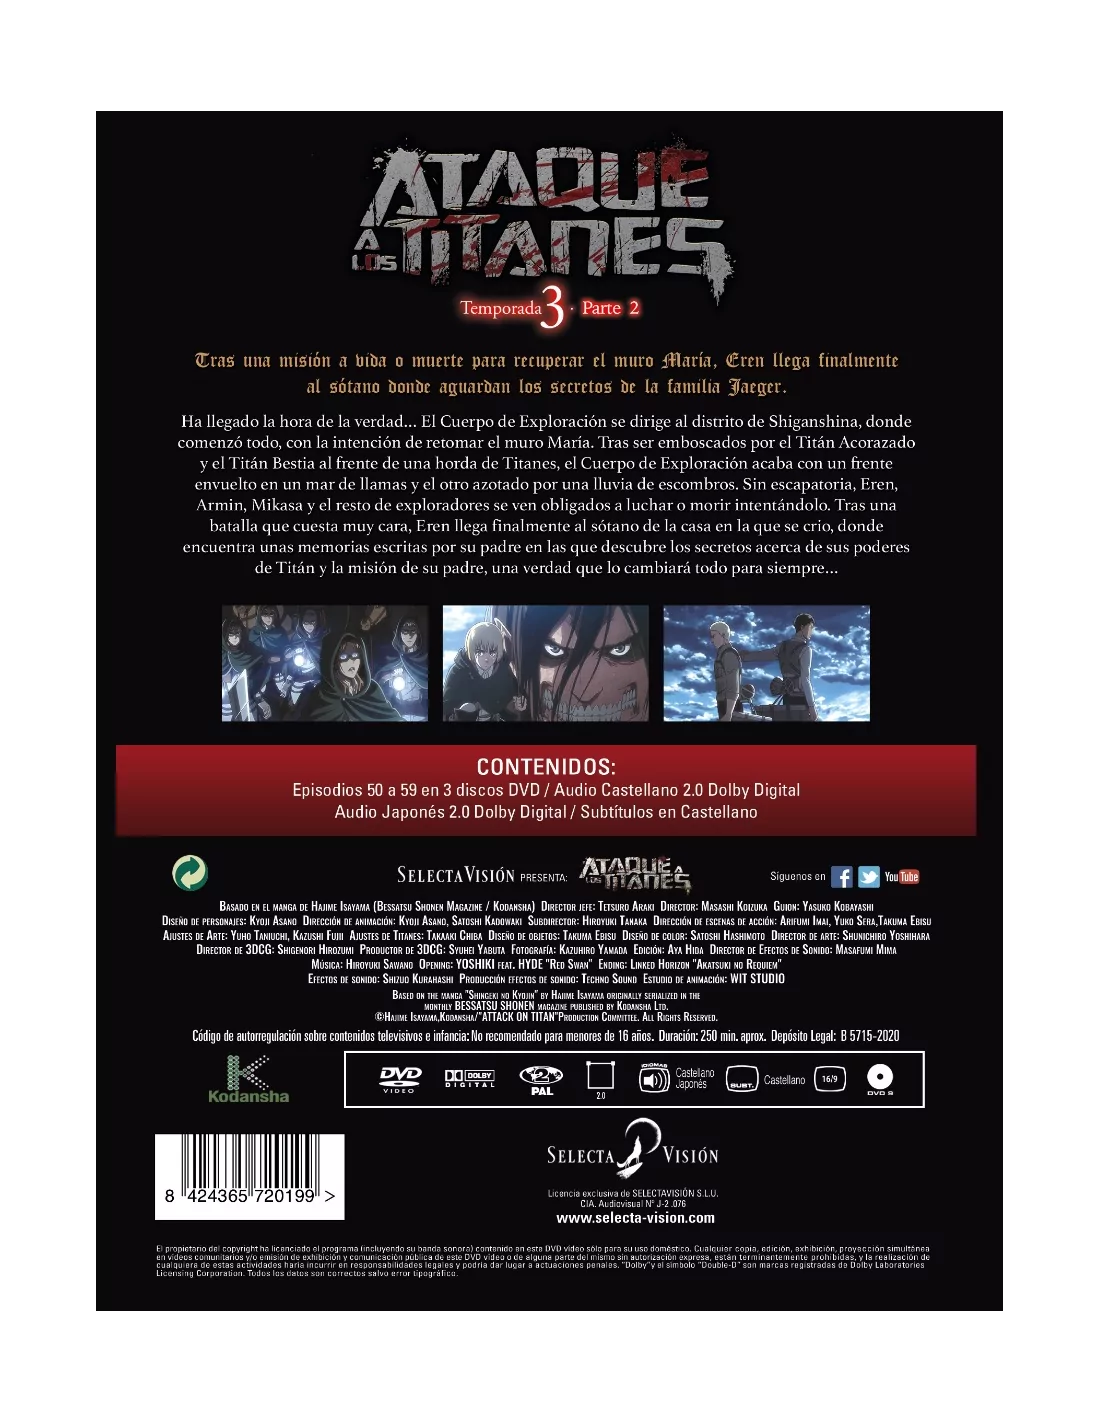 Dvd Ataque Dos Titans Dublado Shingeki Kyojin Temp 1 2 3 - Escorrega o Preço